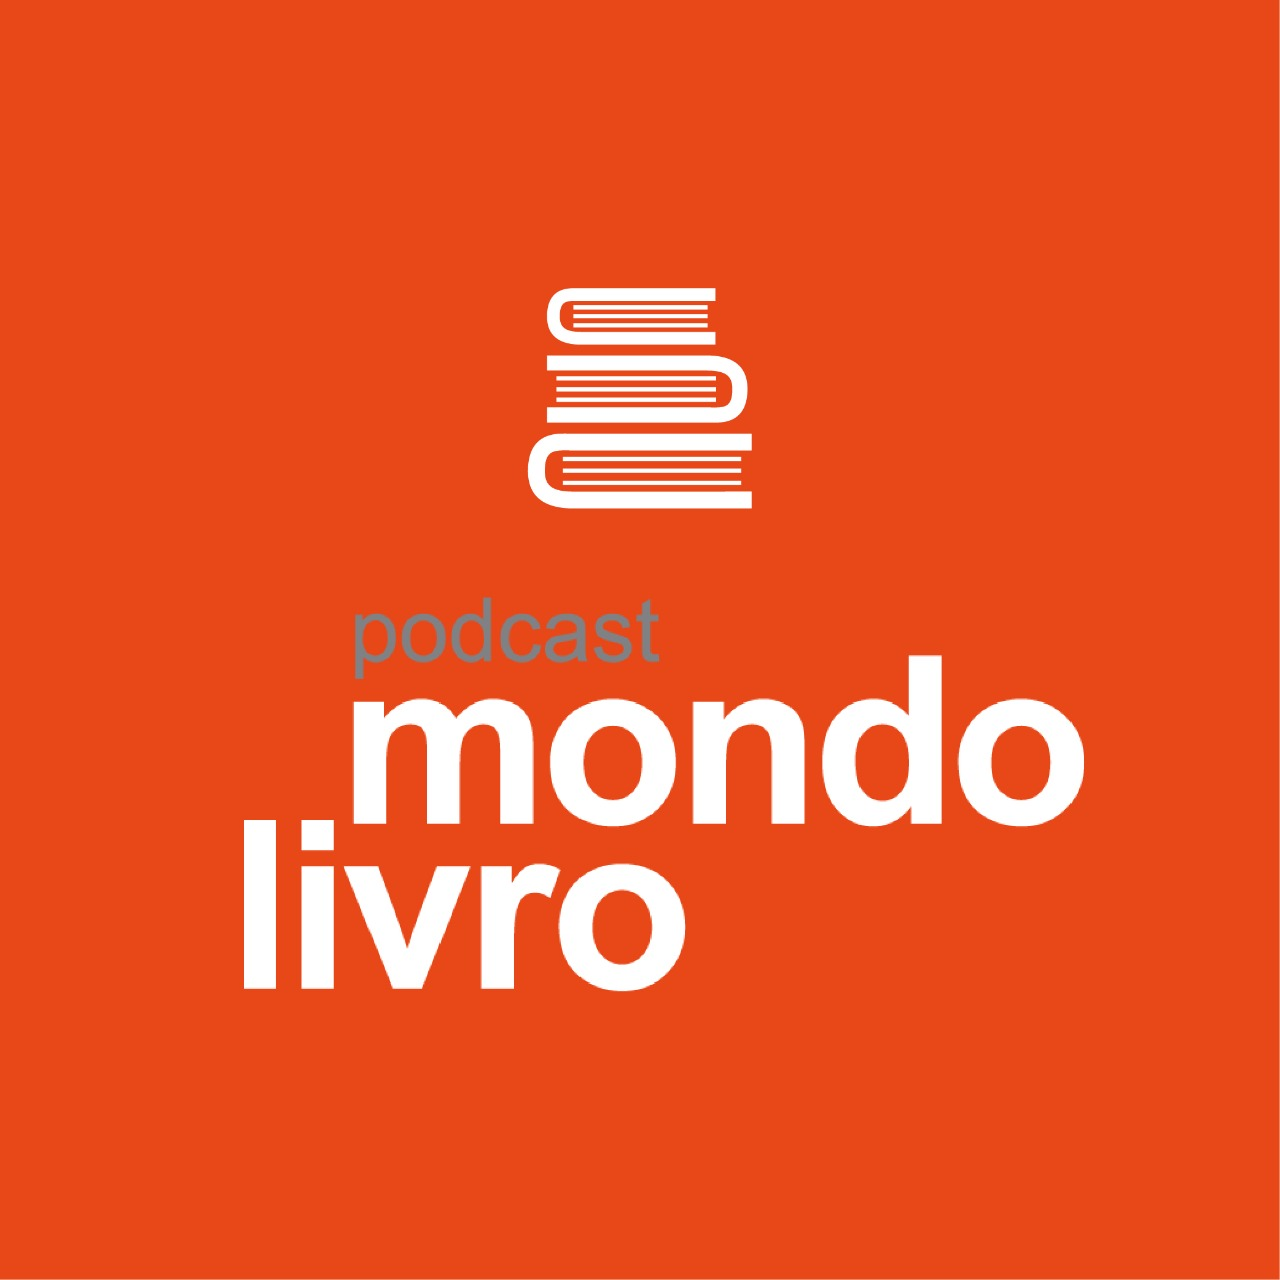 Mondolivro Podcast - Podcast: Luiz Ruffato fala sobre o seu novo romance, “O antigo futuro”